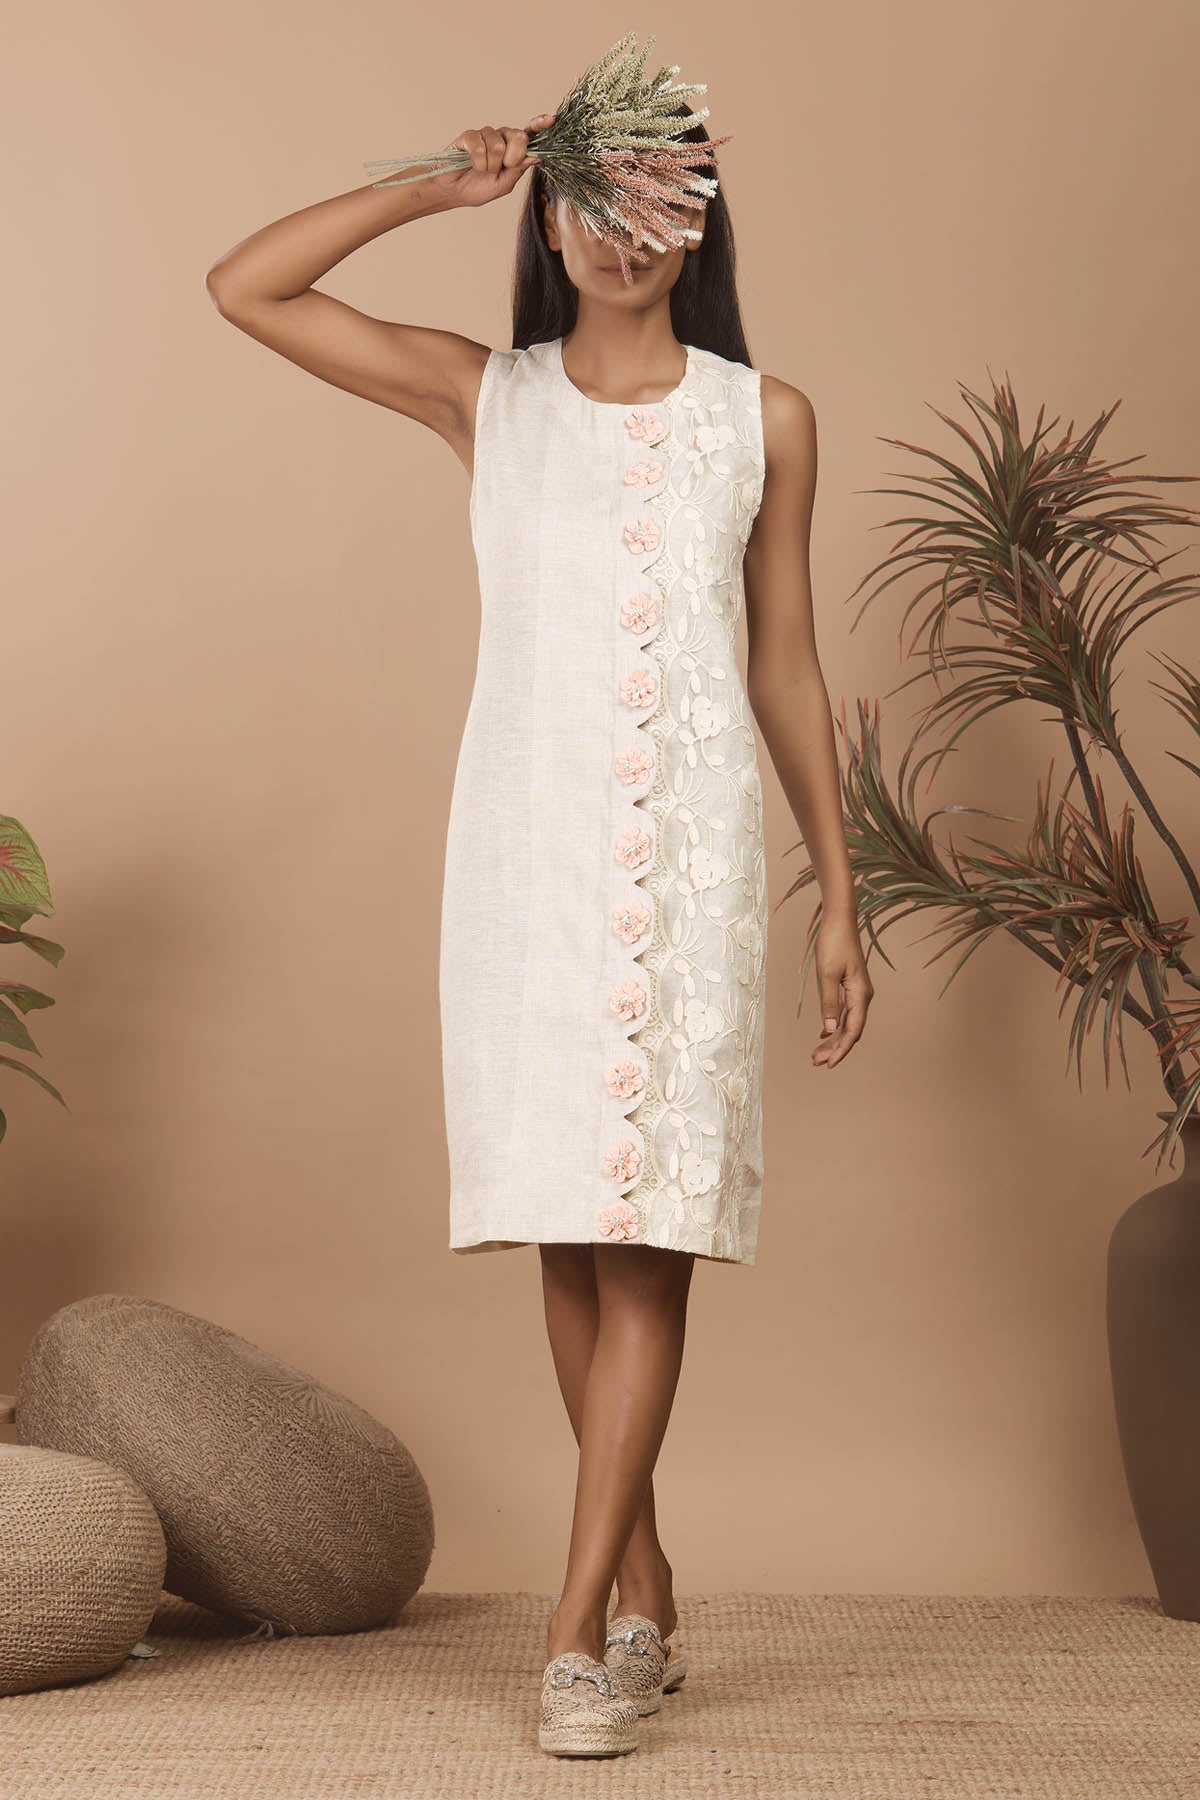 Buy Niyami Scallop Lace Linen Dress: Beige at scrollnshops